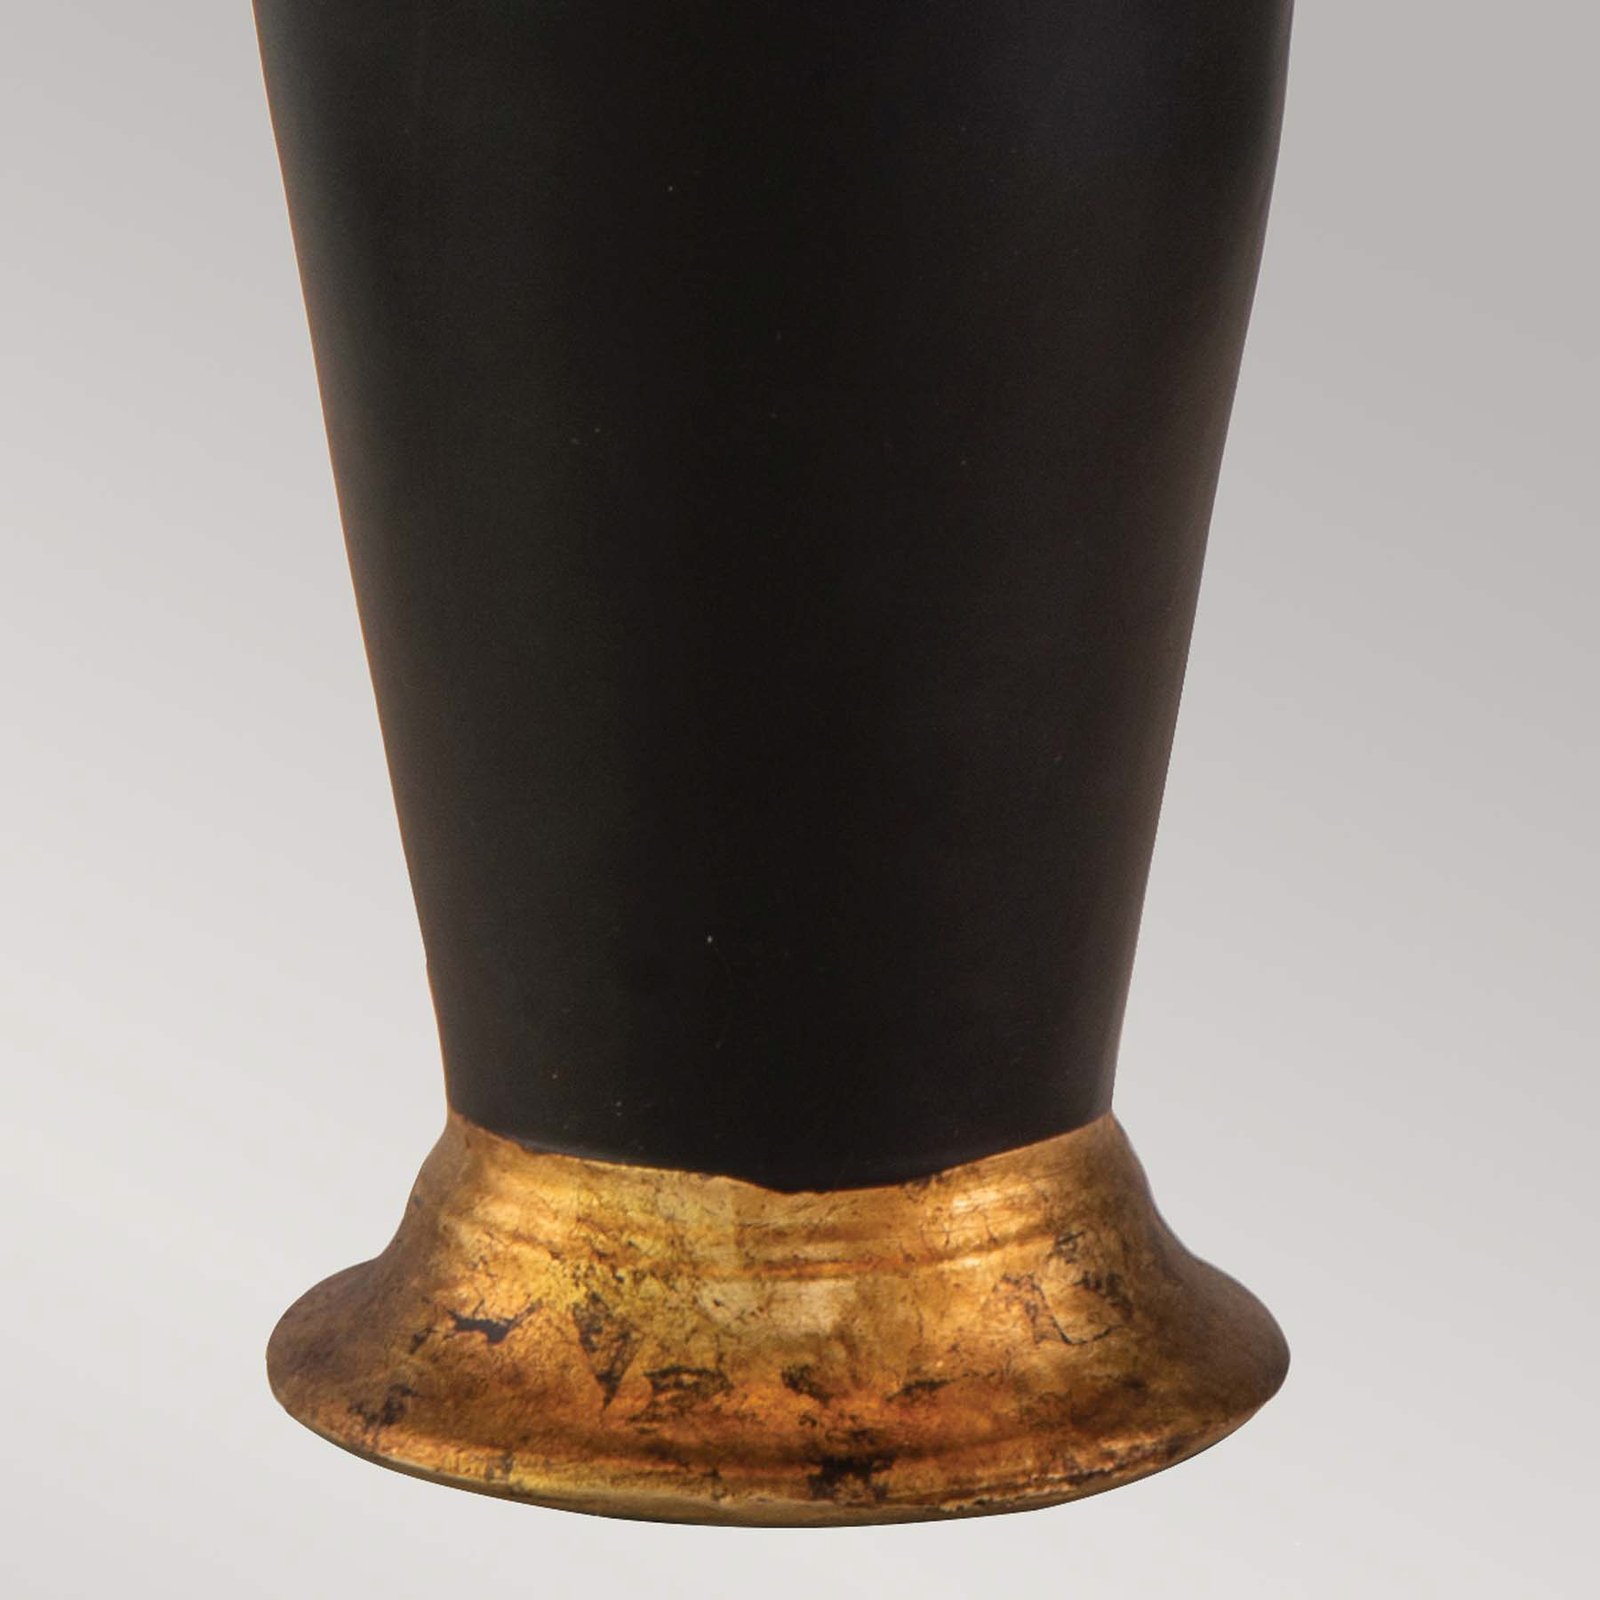 Gallier table lamp, black/white, textile, 63.5 cm high